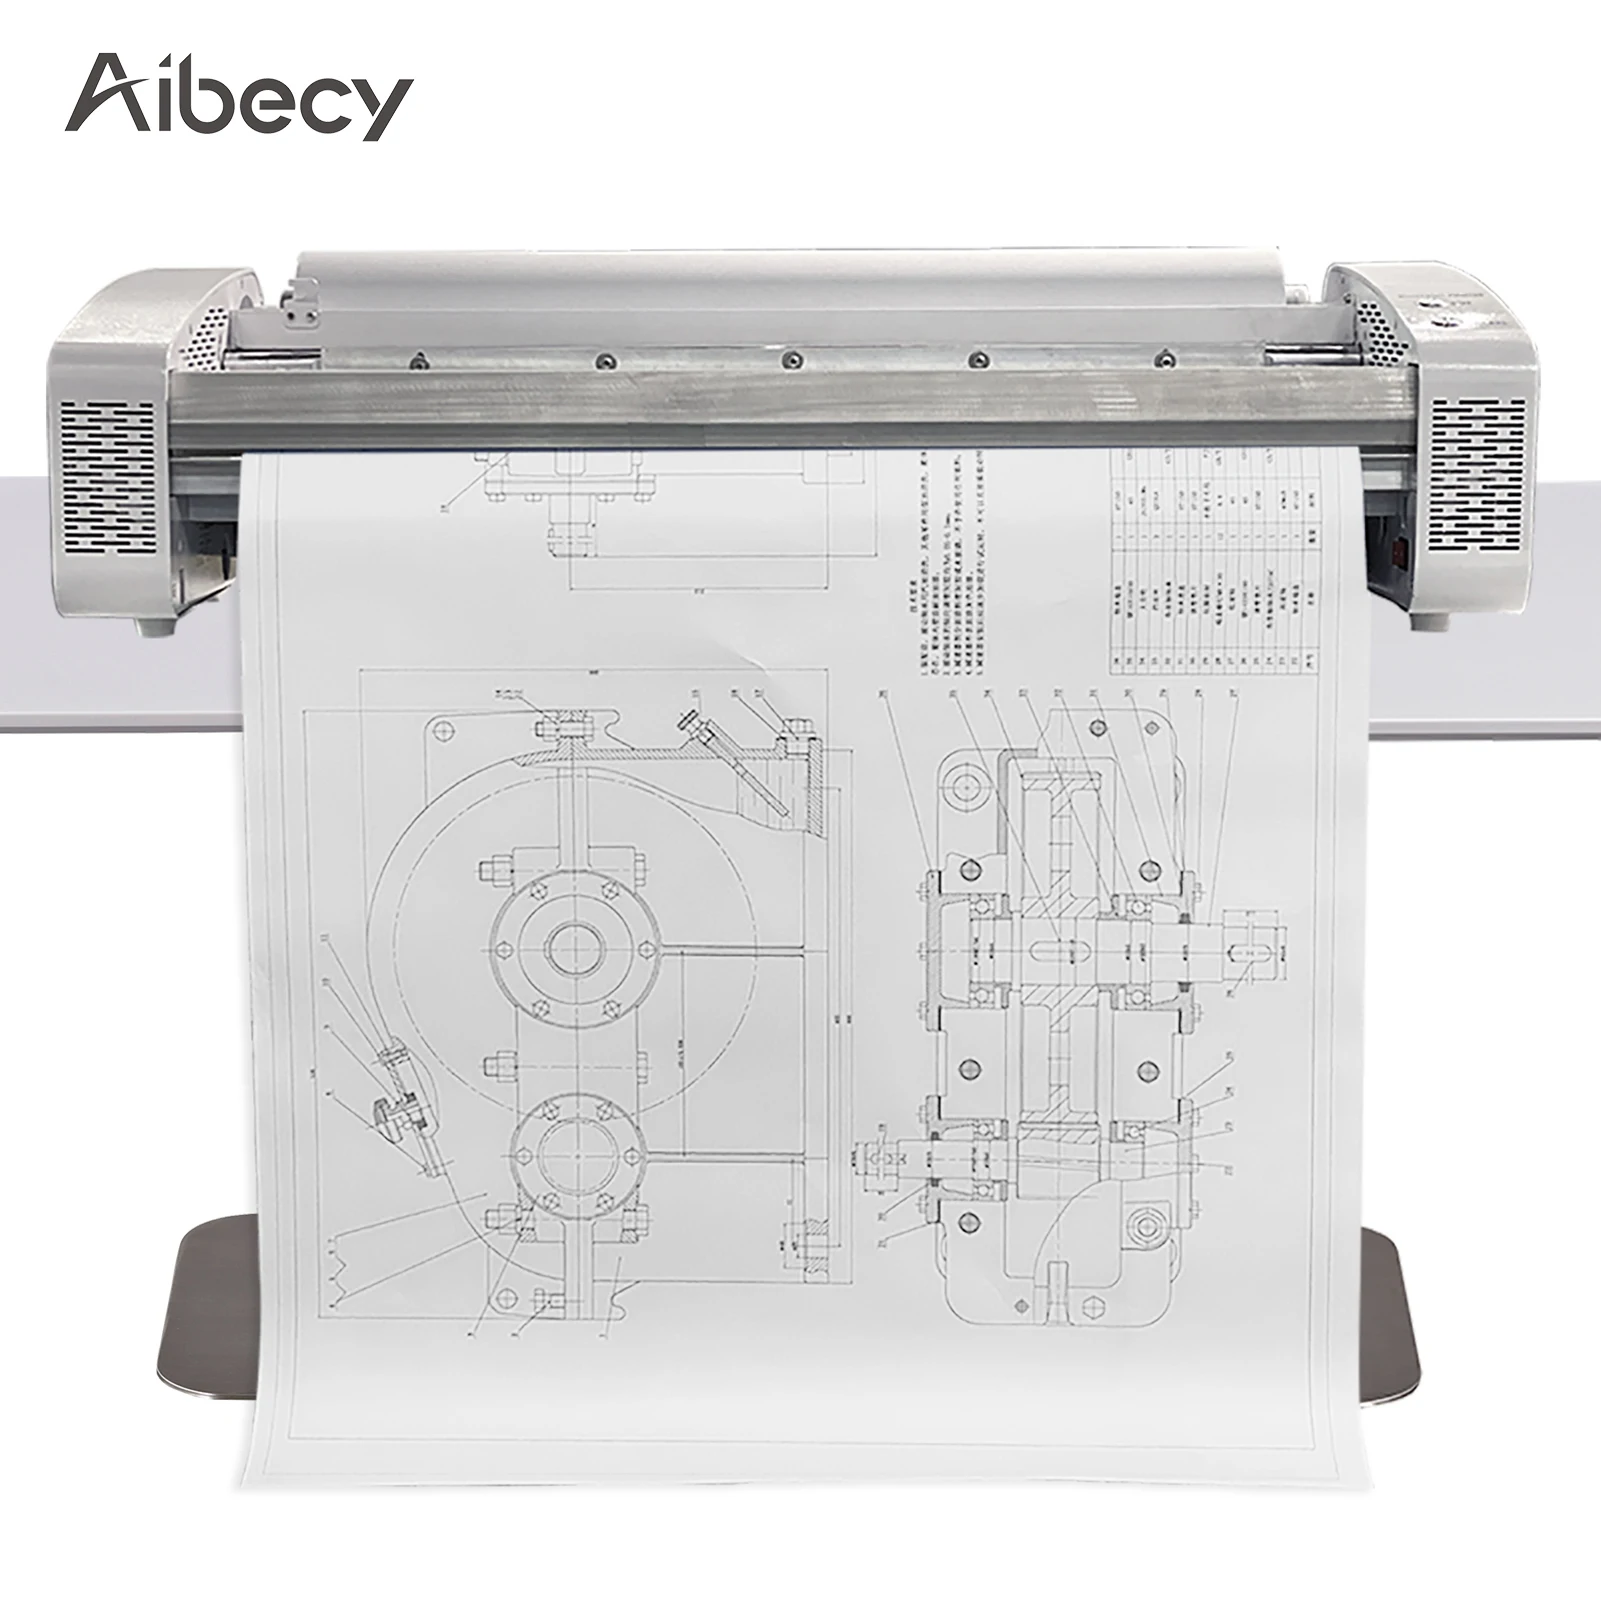 

Aibecy G6 Large Format Plotter Printer 36 Inch Engineering CAD Drawings Printer Hot-Melt Technology No Ink or Toner Cartridges